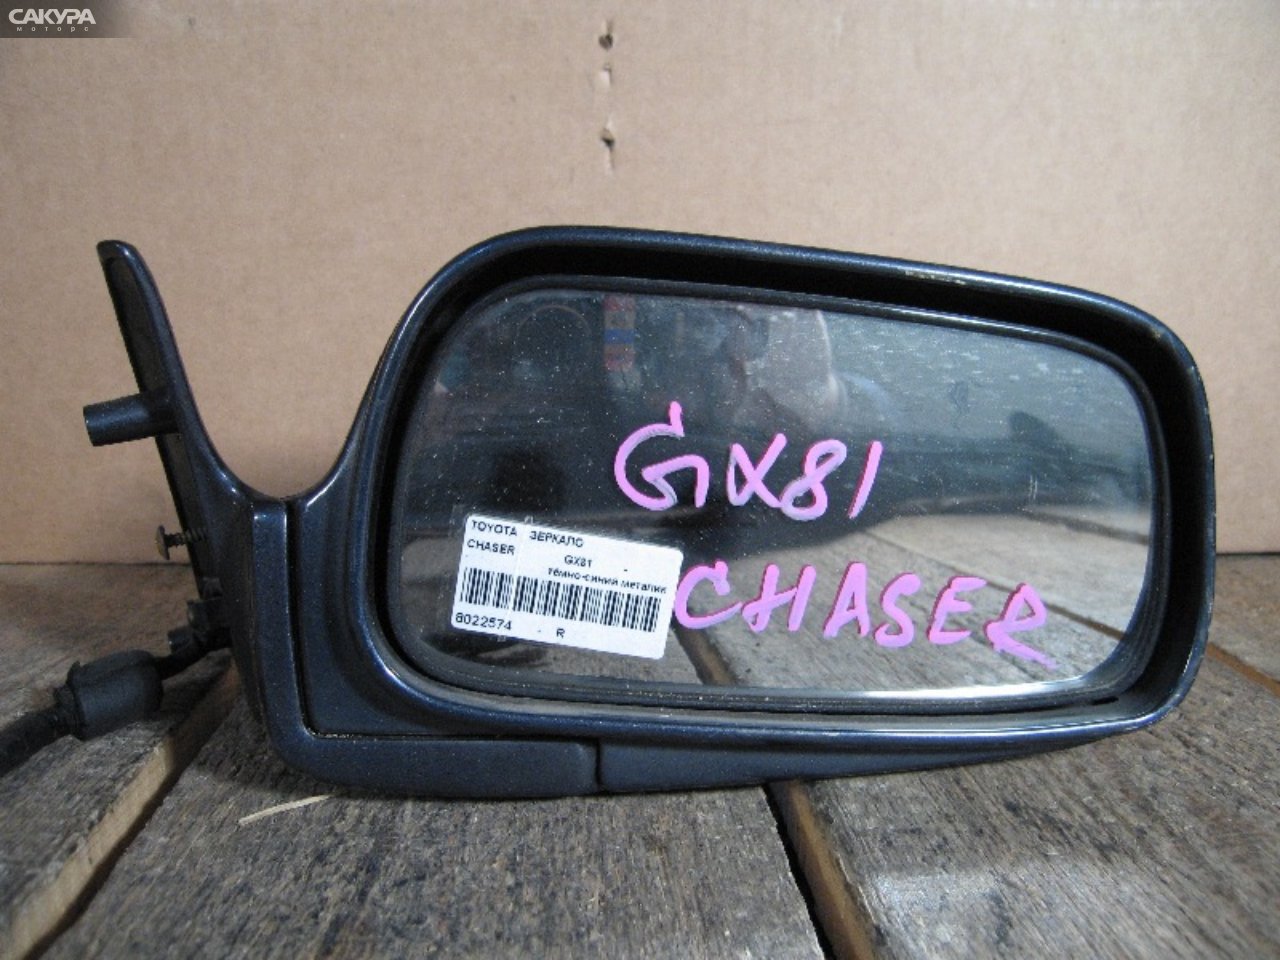 Зеркало боковое правое Toyota Chaser GX81: купить в Сакура Абакан.